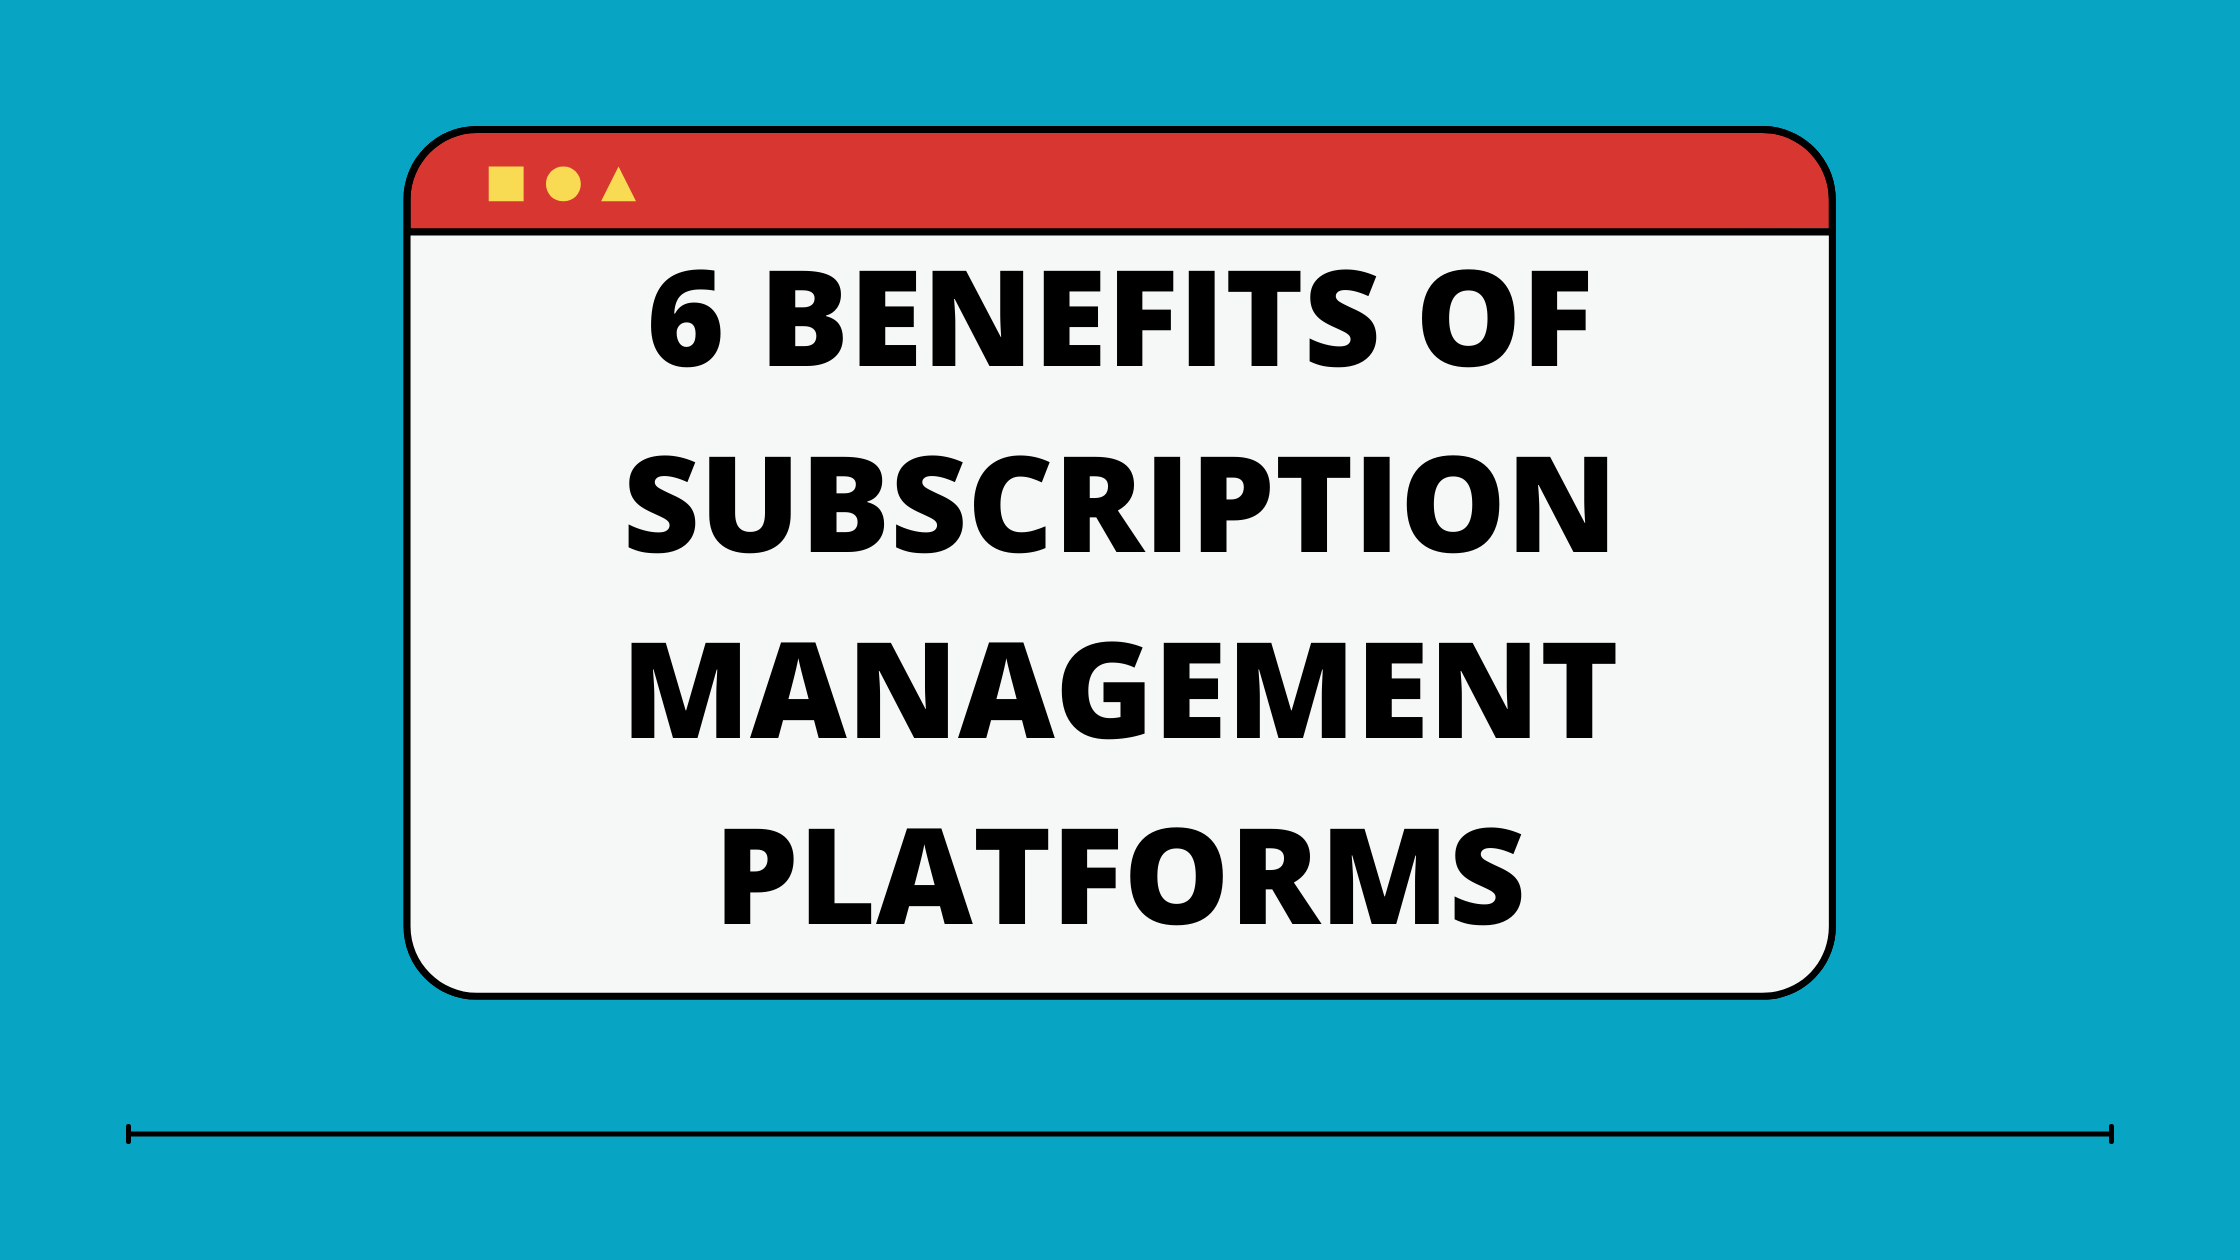 Subscription management platform